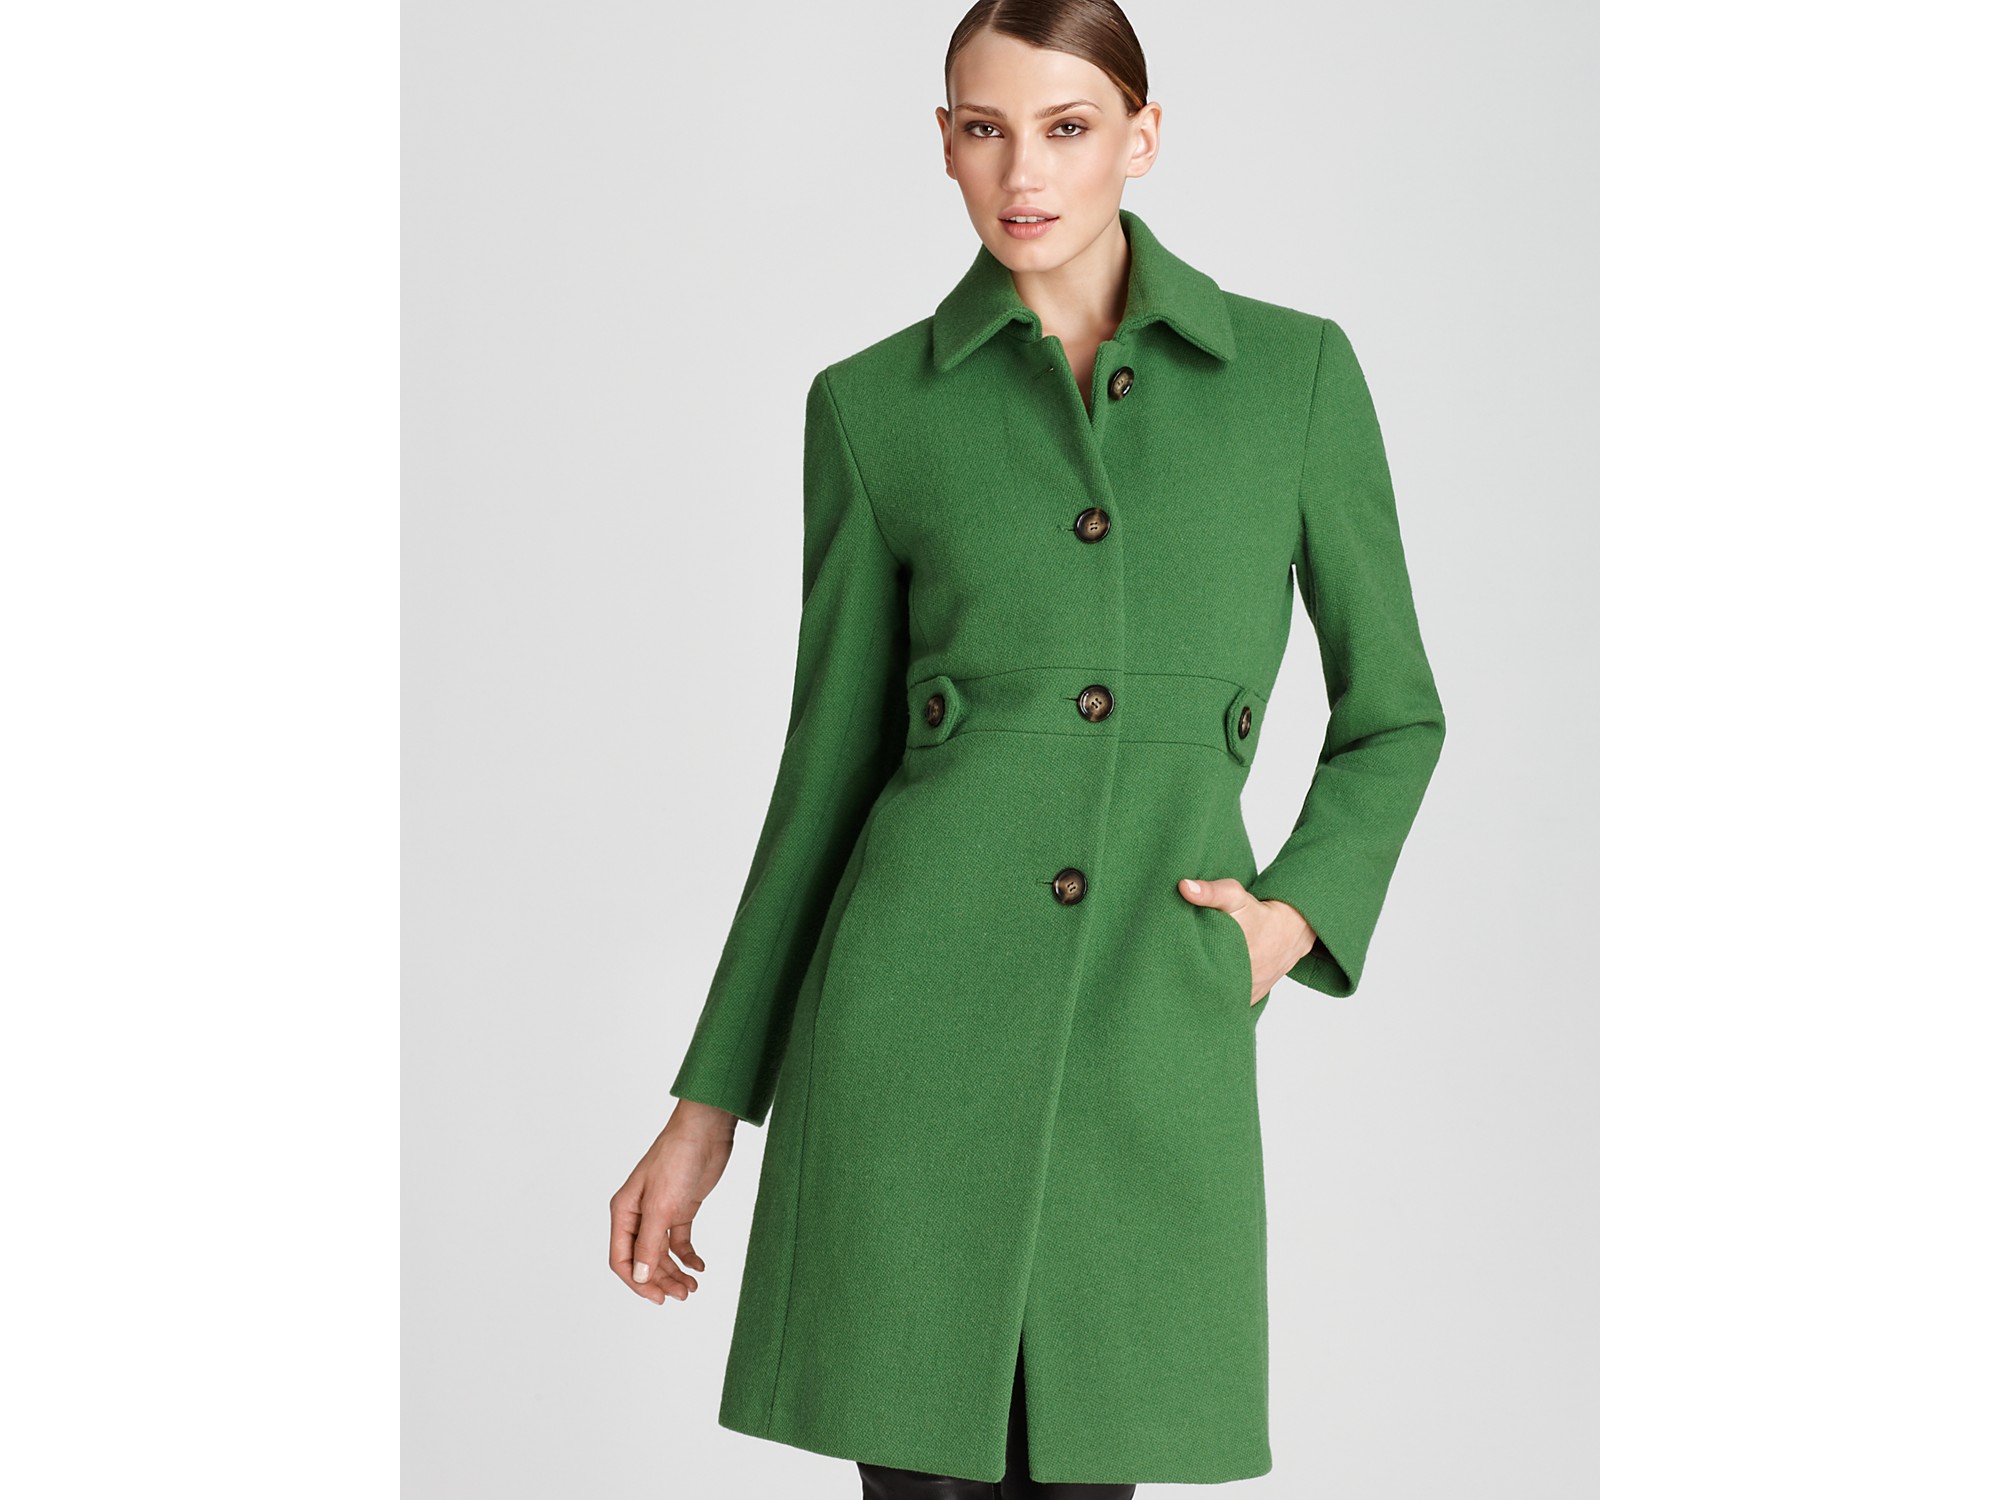 Lyst - Calvin Klein Lady Coat in Green